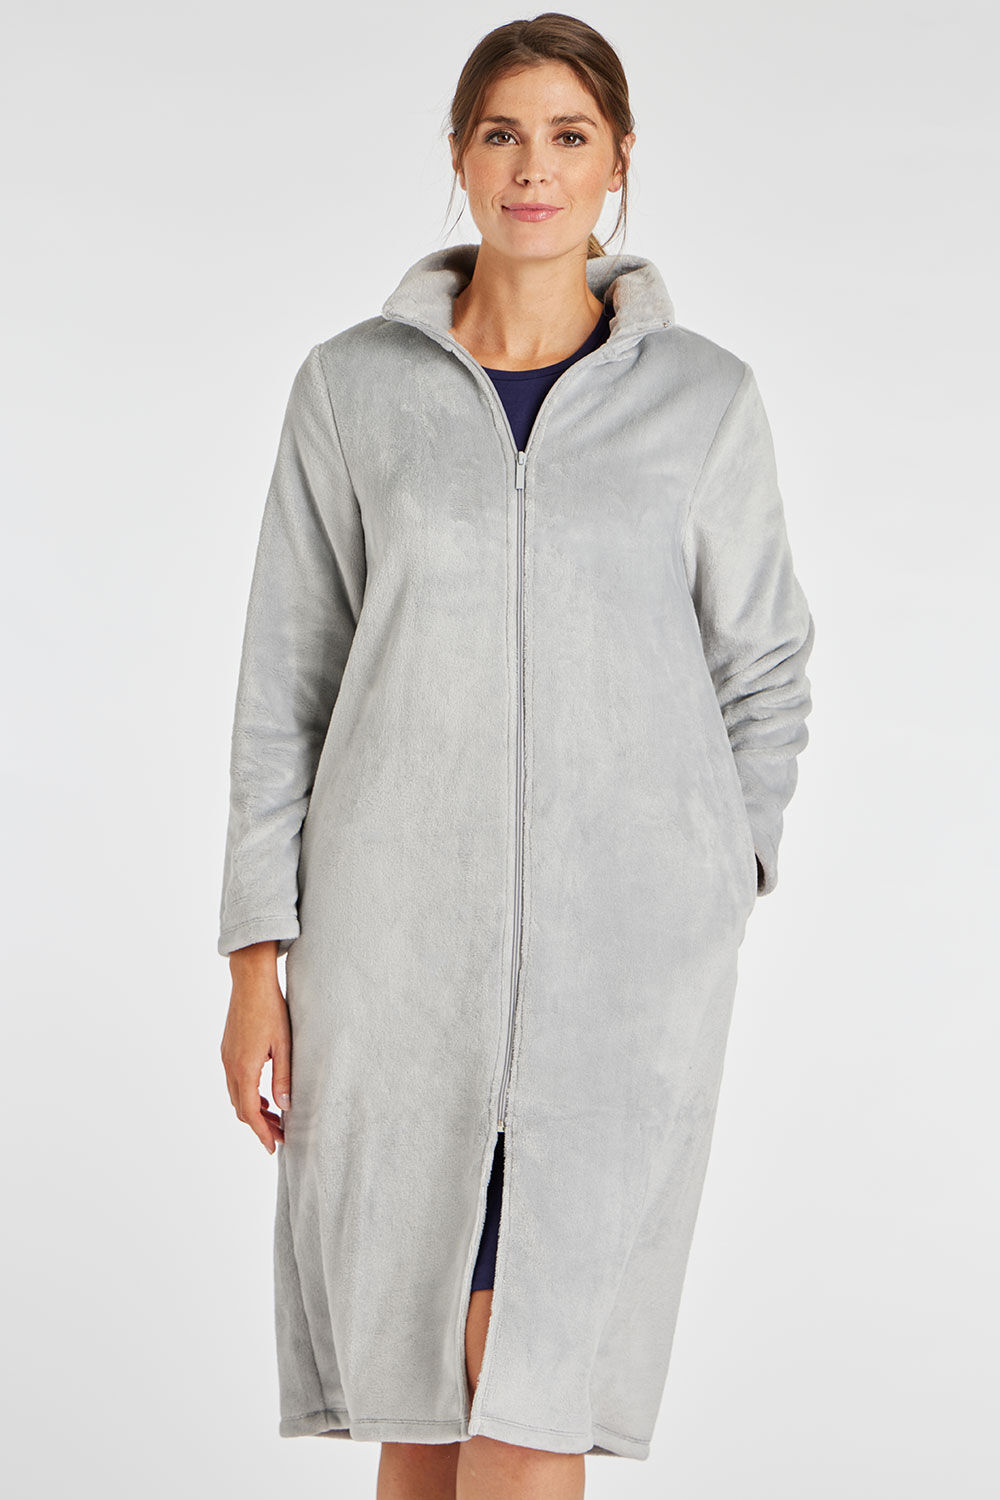 Bonmarche Aqua Fleece Zip Through Dressing Gown, Size: 08-10